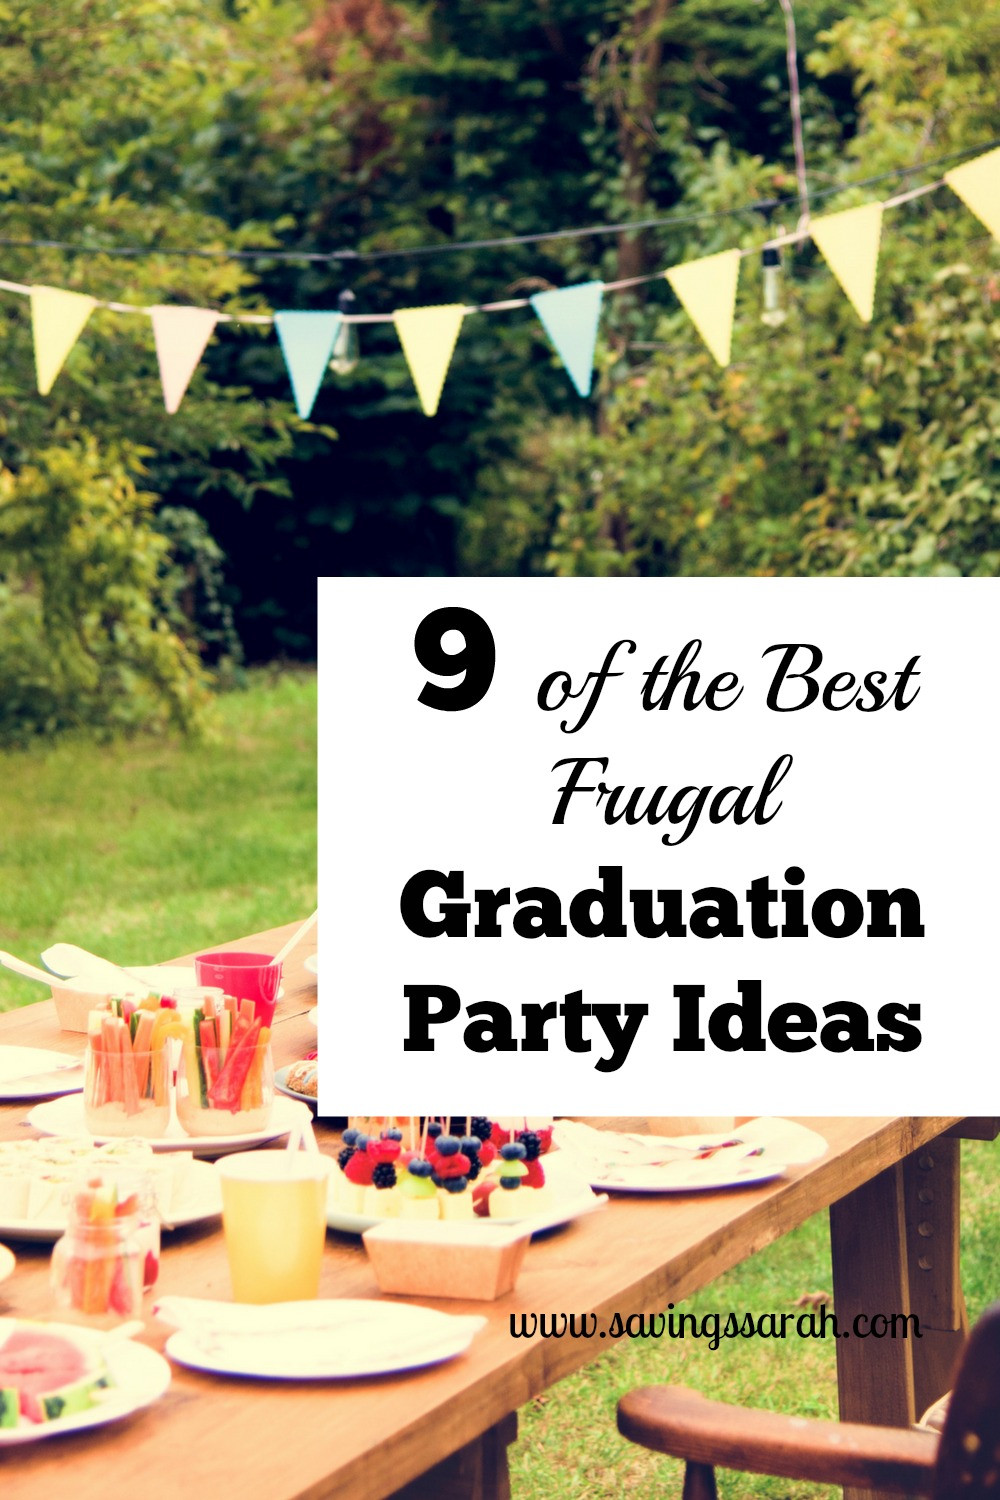 Pinterest High School Graduation Party Ideas
 9 the Best Frugal Graduation Party Ideas Earning and